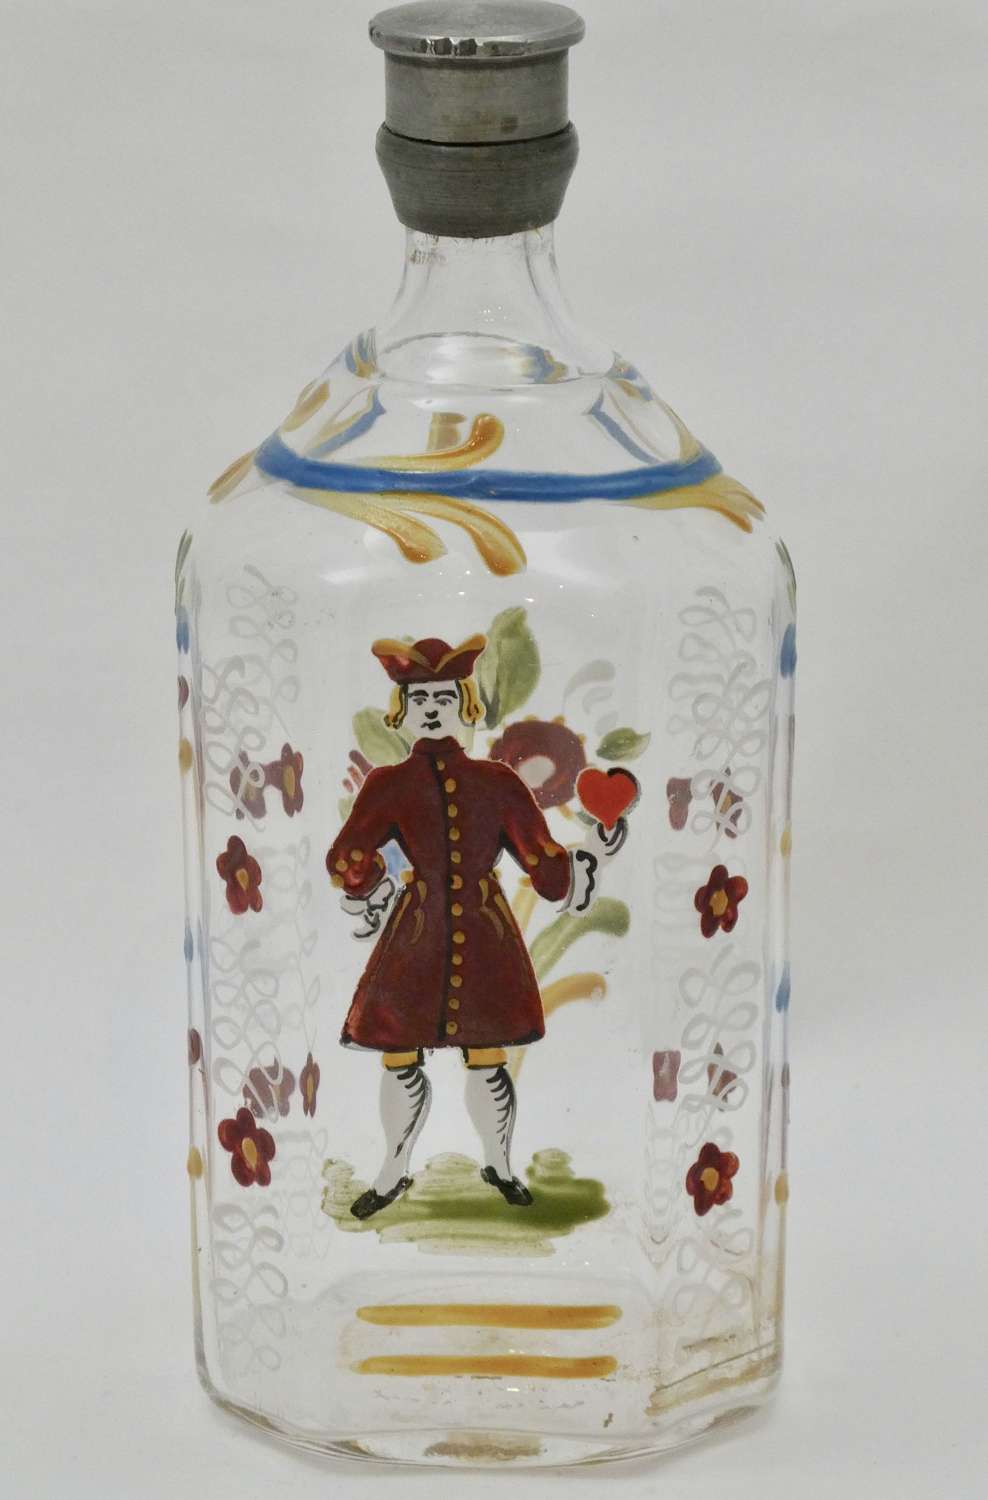 19th Century Steigel Type Enamelled Glass Bottle